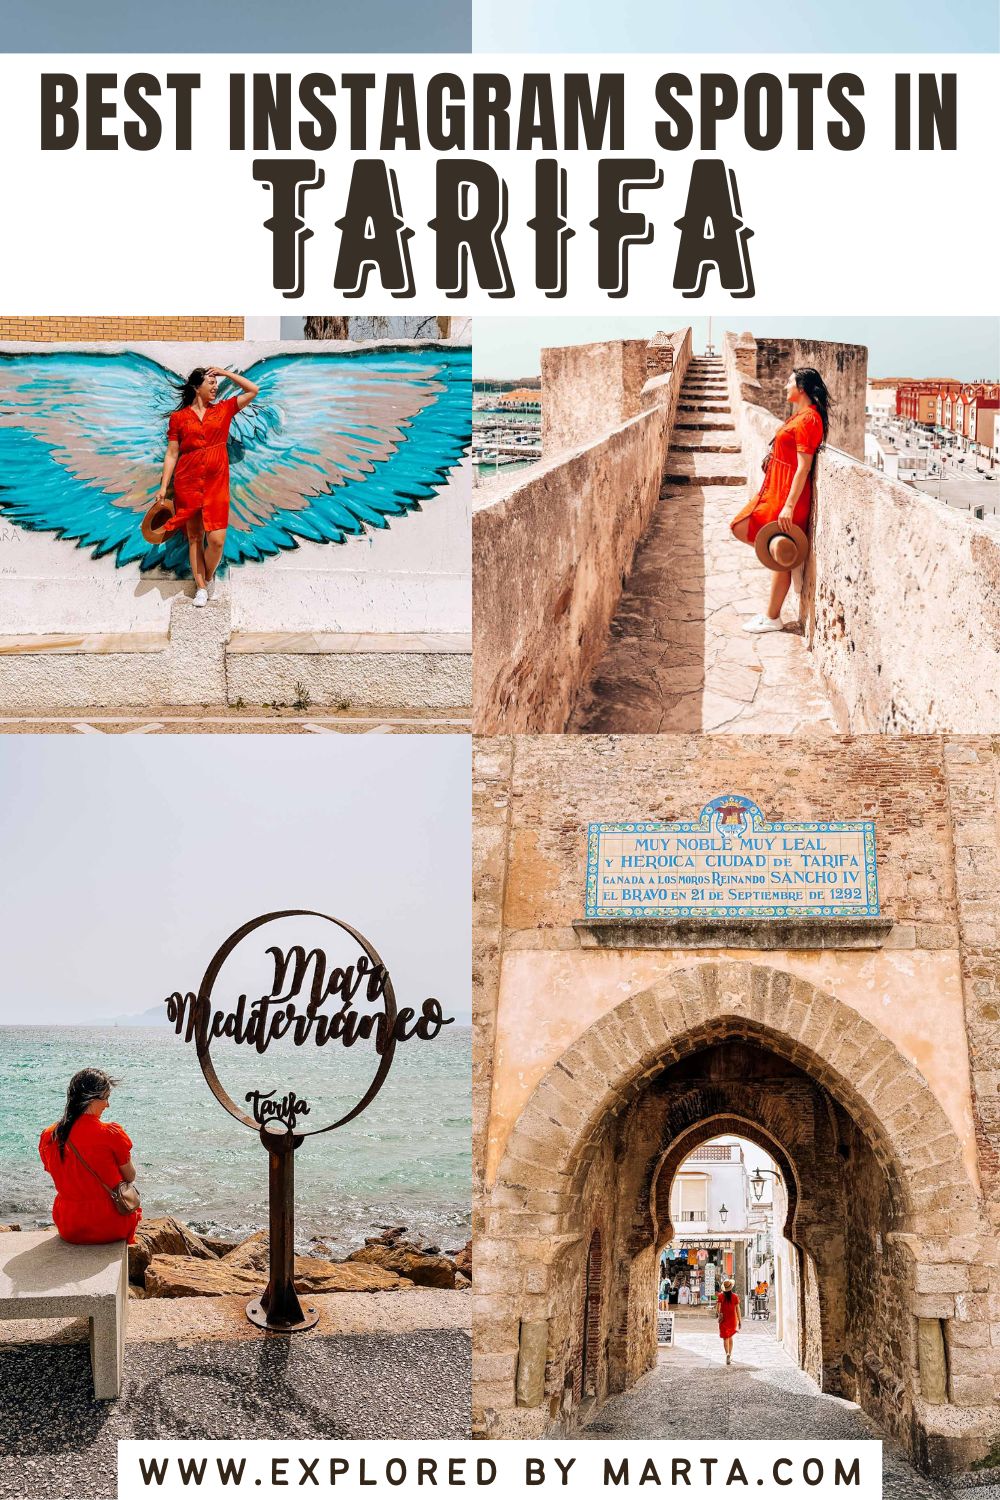 Instagram spots you should see in Tarifa, Spain